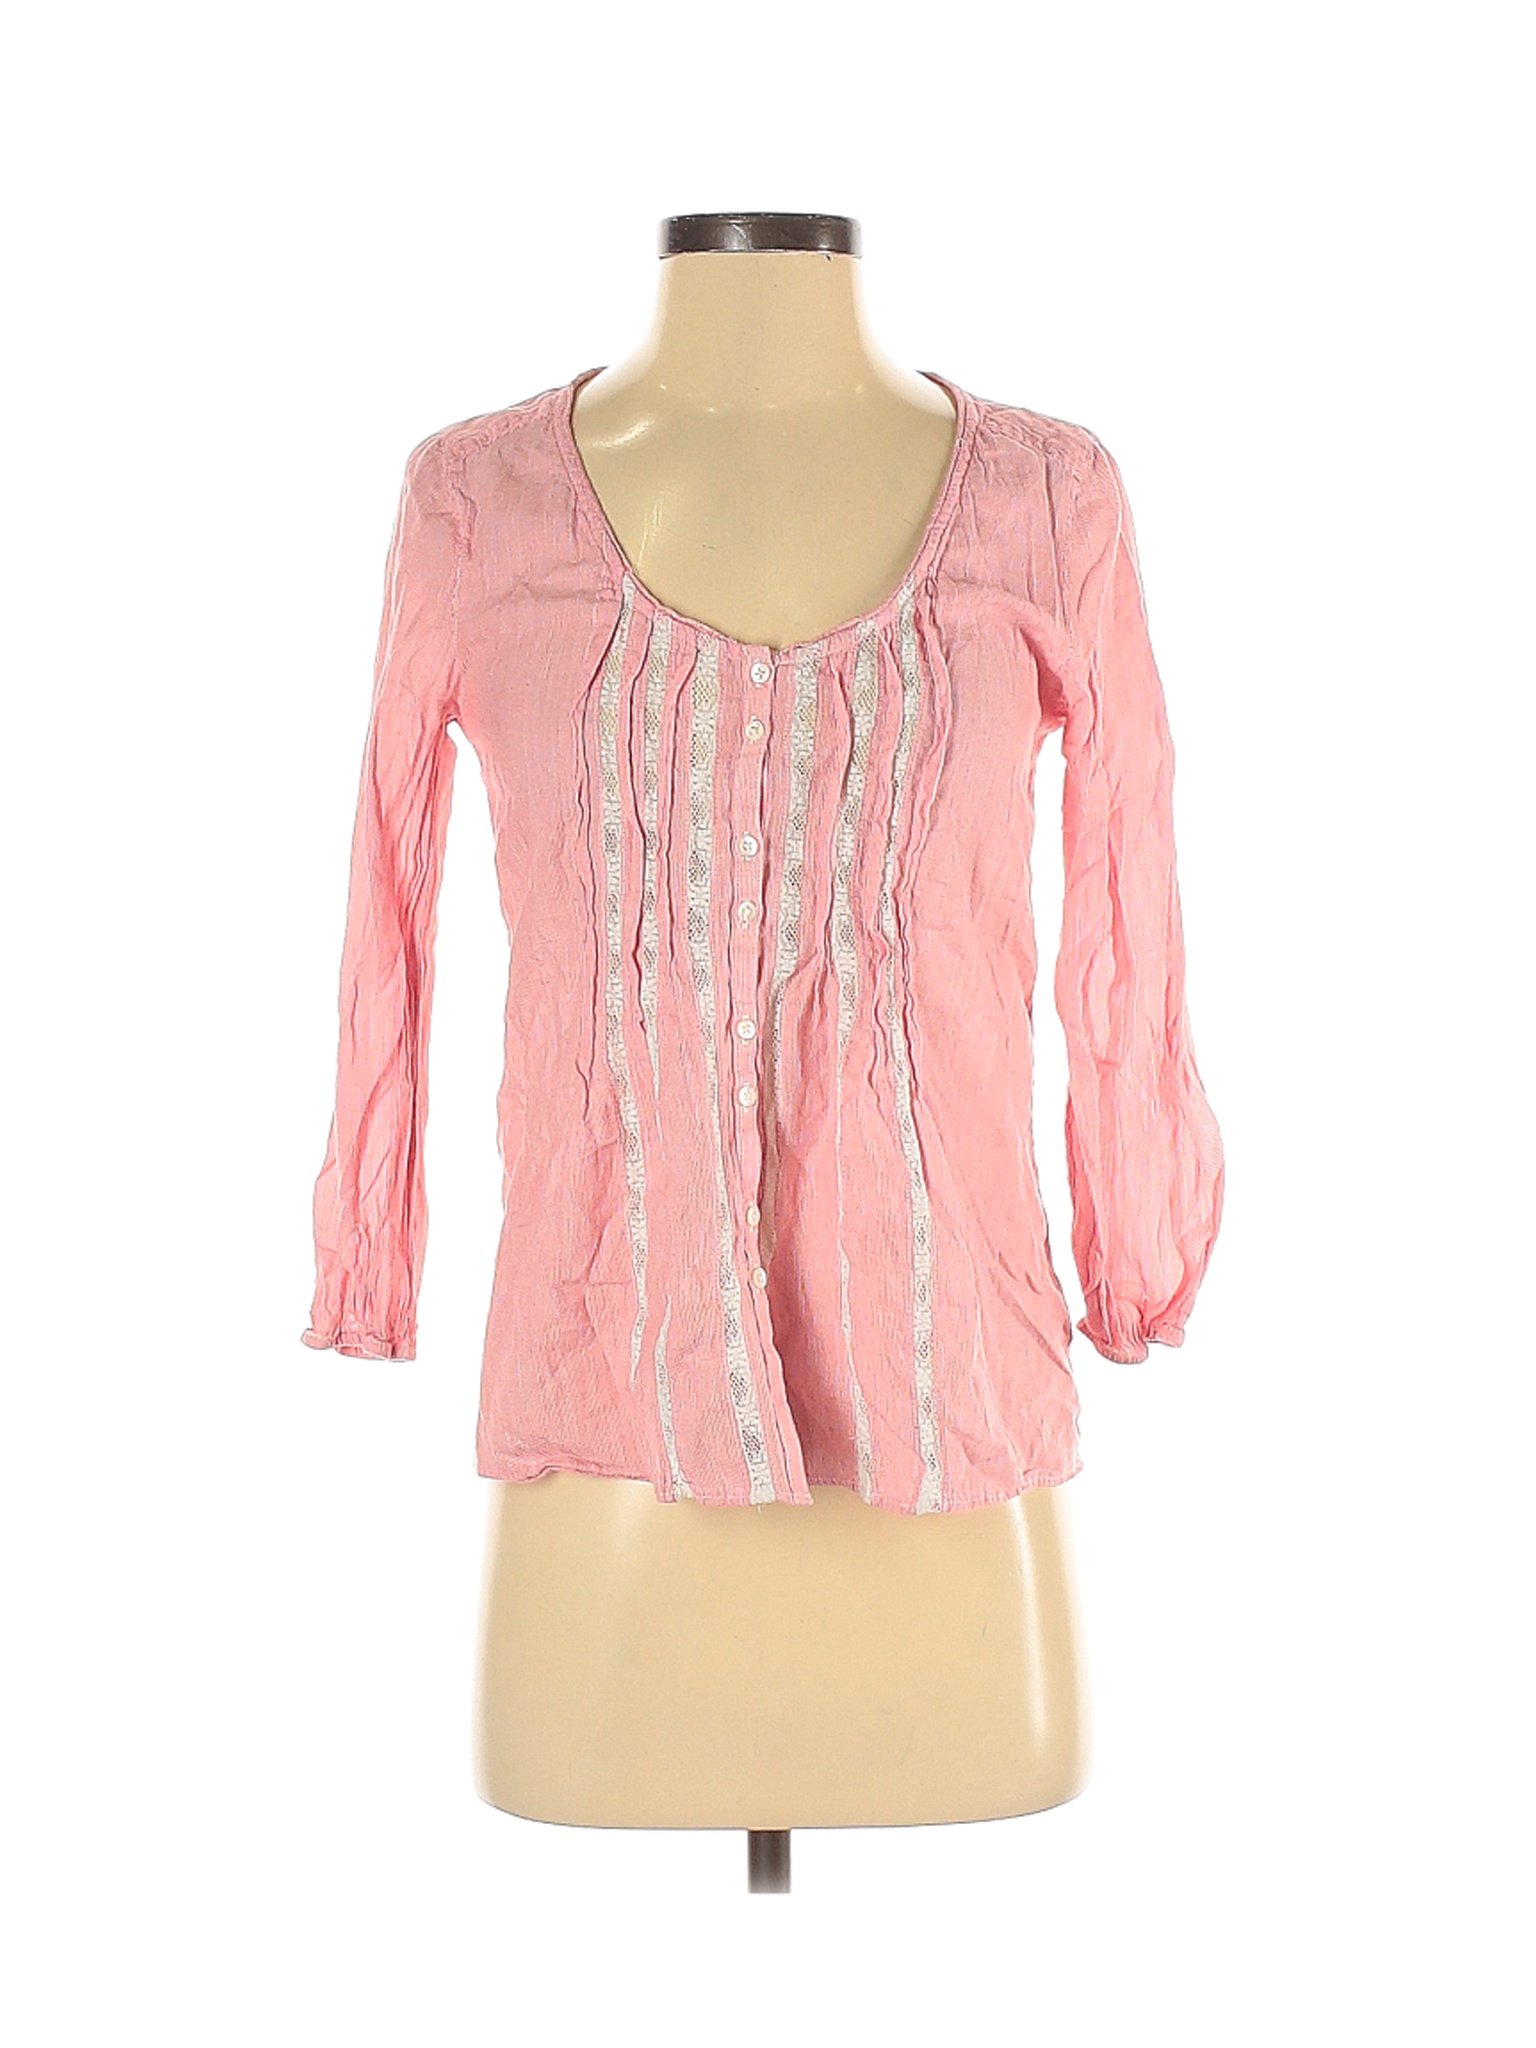 Aerie Women Pink Long Sleeve Blouse XS | eBay